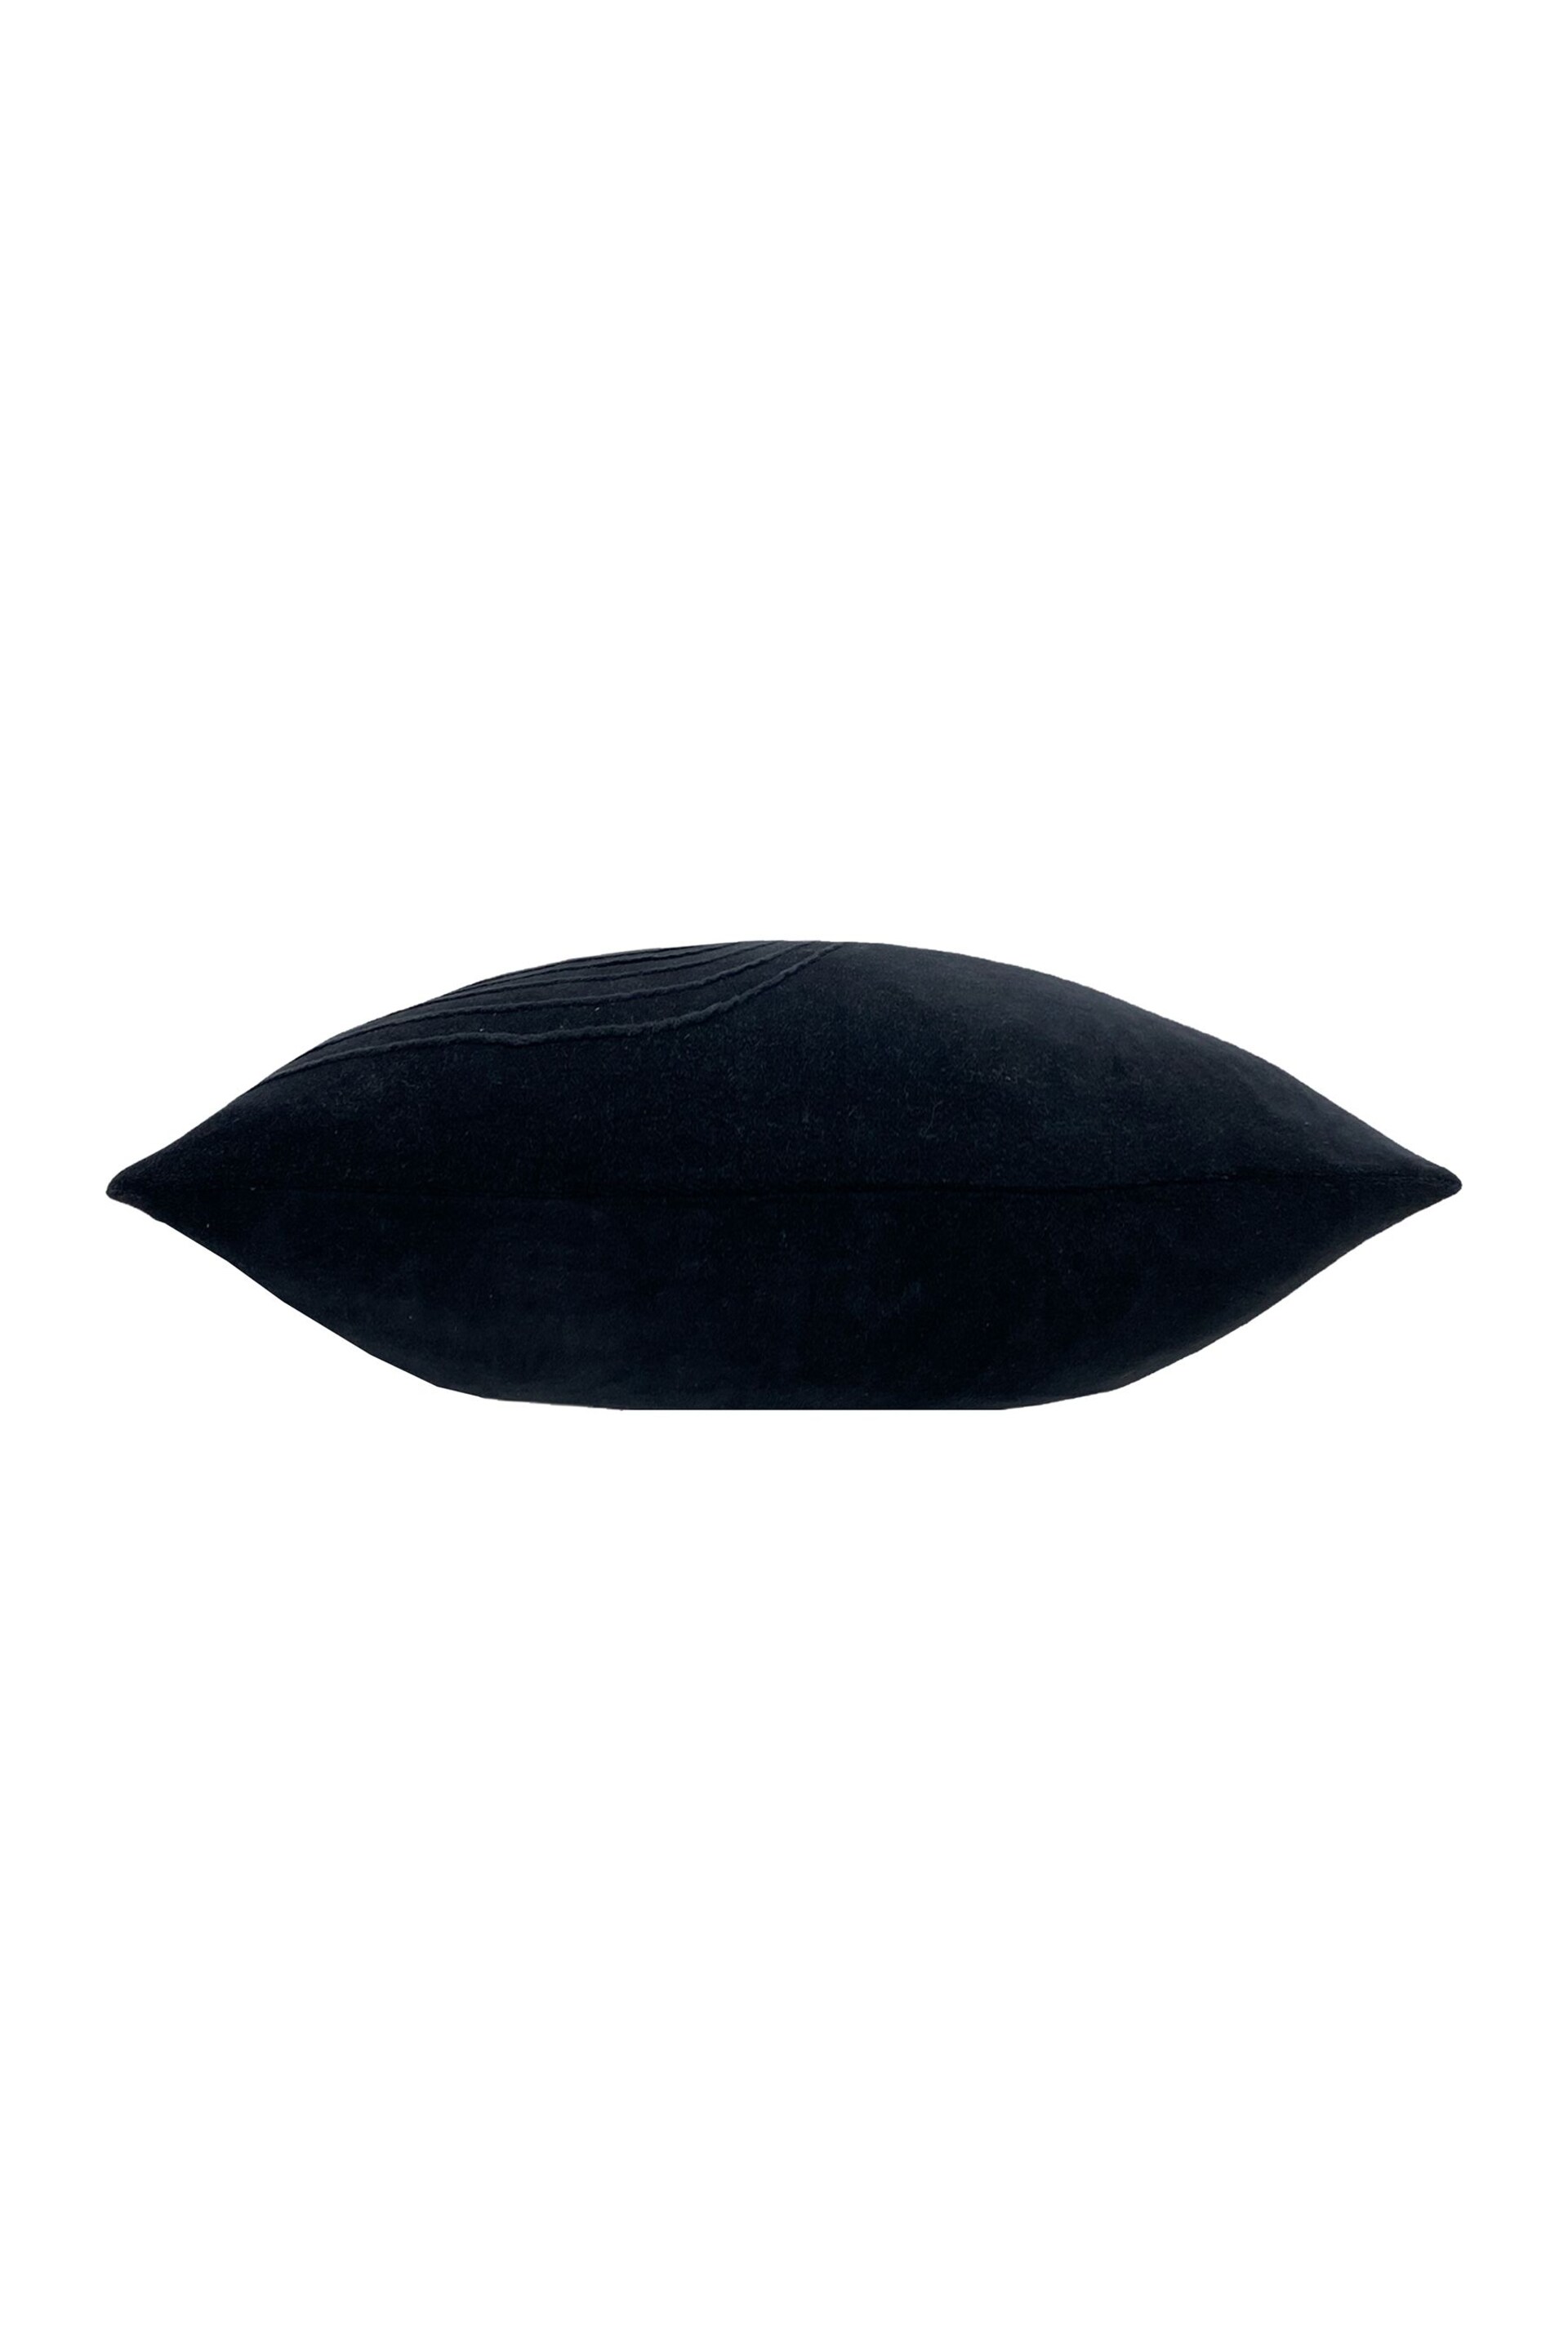 furn. Black Mangata Cushion - Image 3 of 4